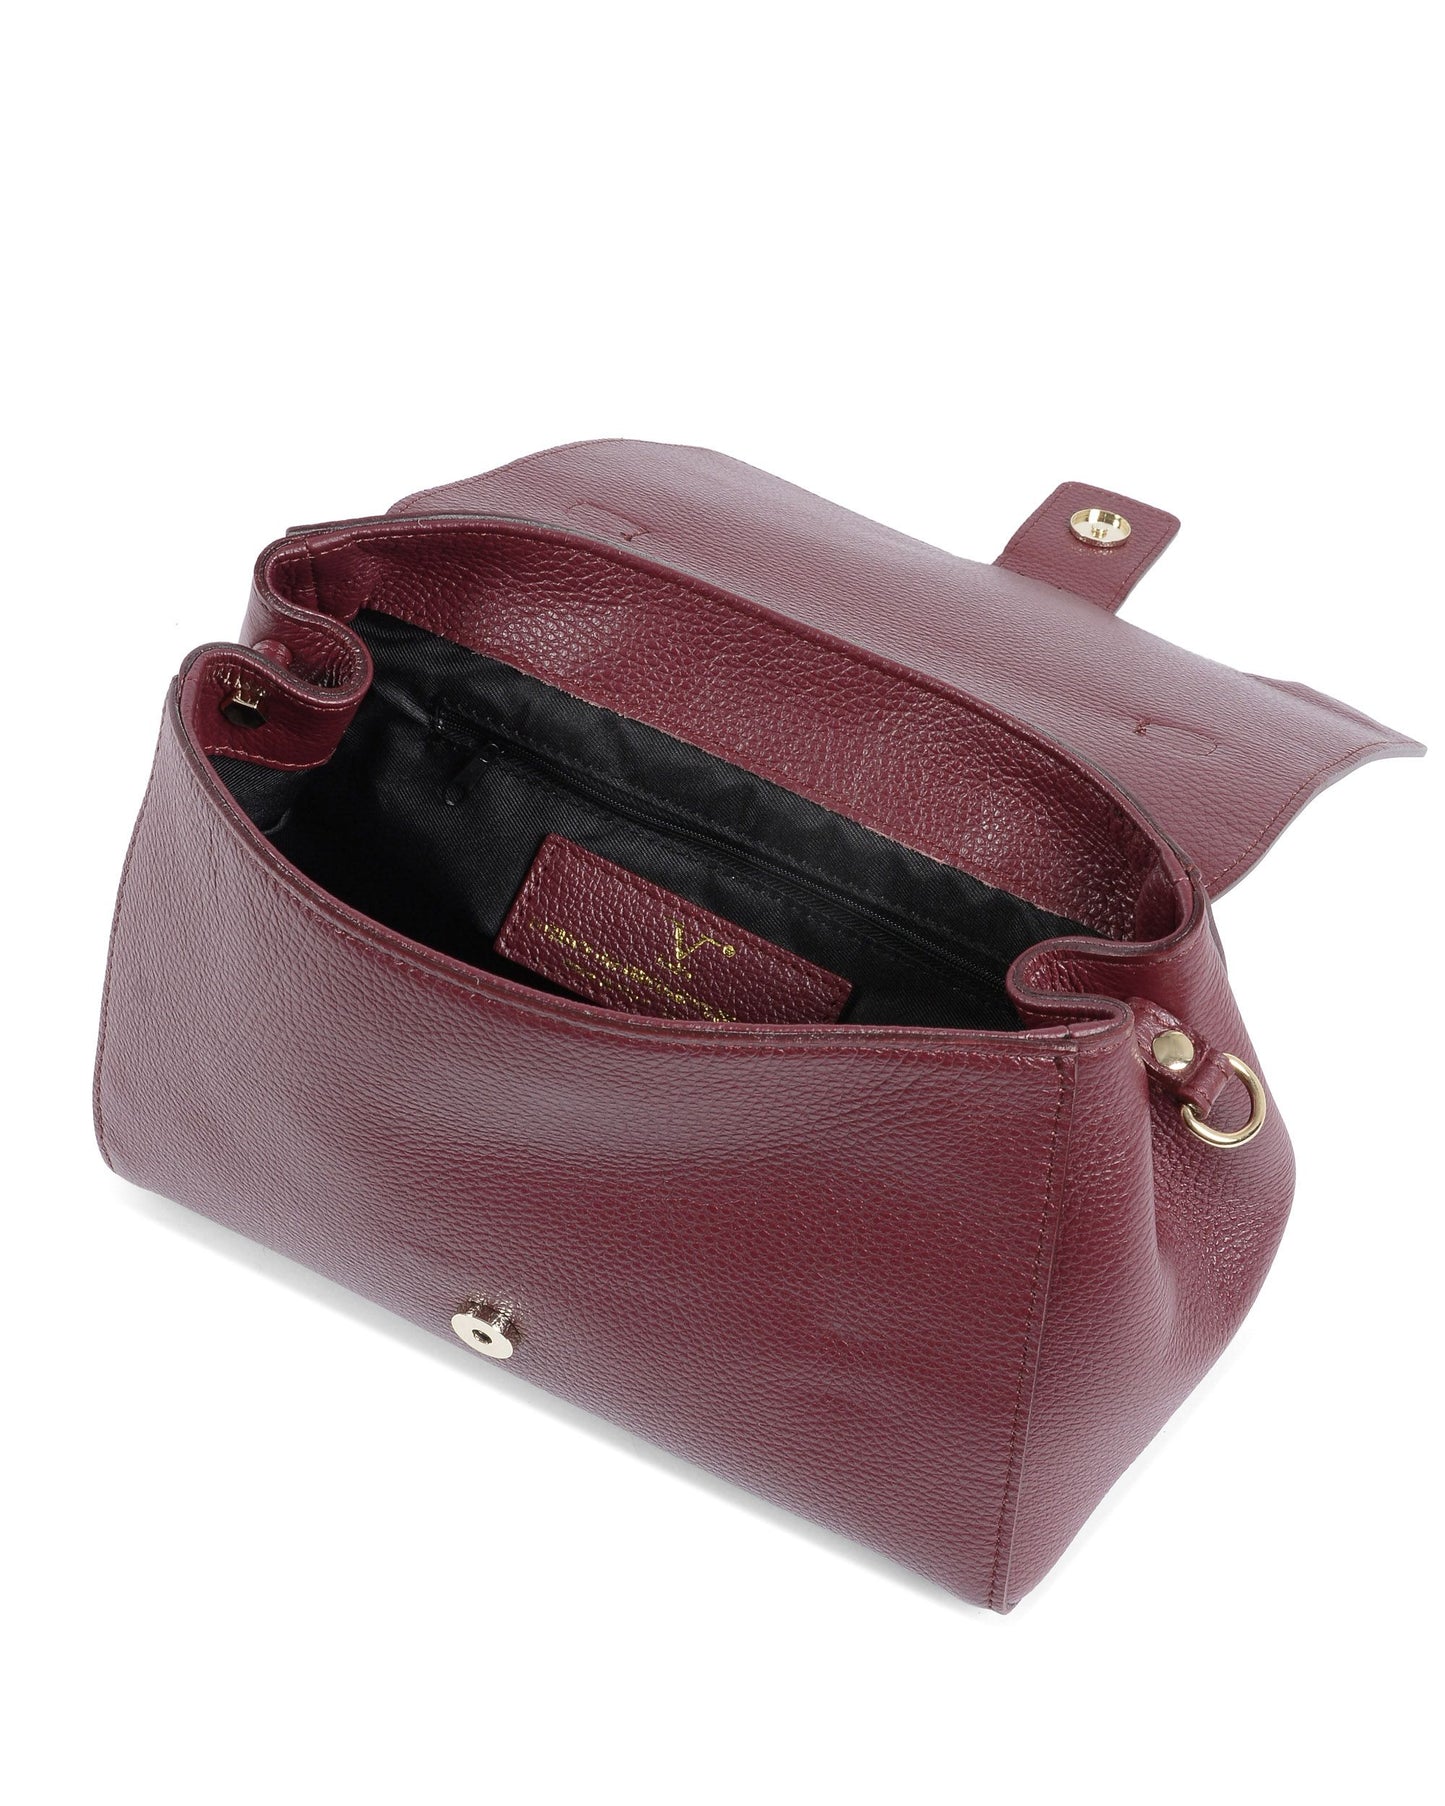 V Italia Womens Handbag Bordeaux BC10280 52 DOLLARO BORDEAUX